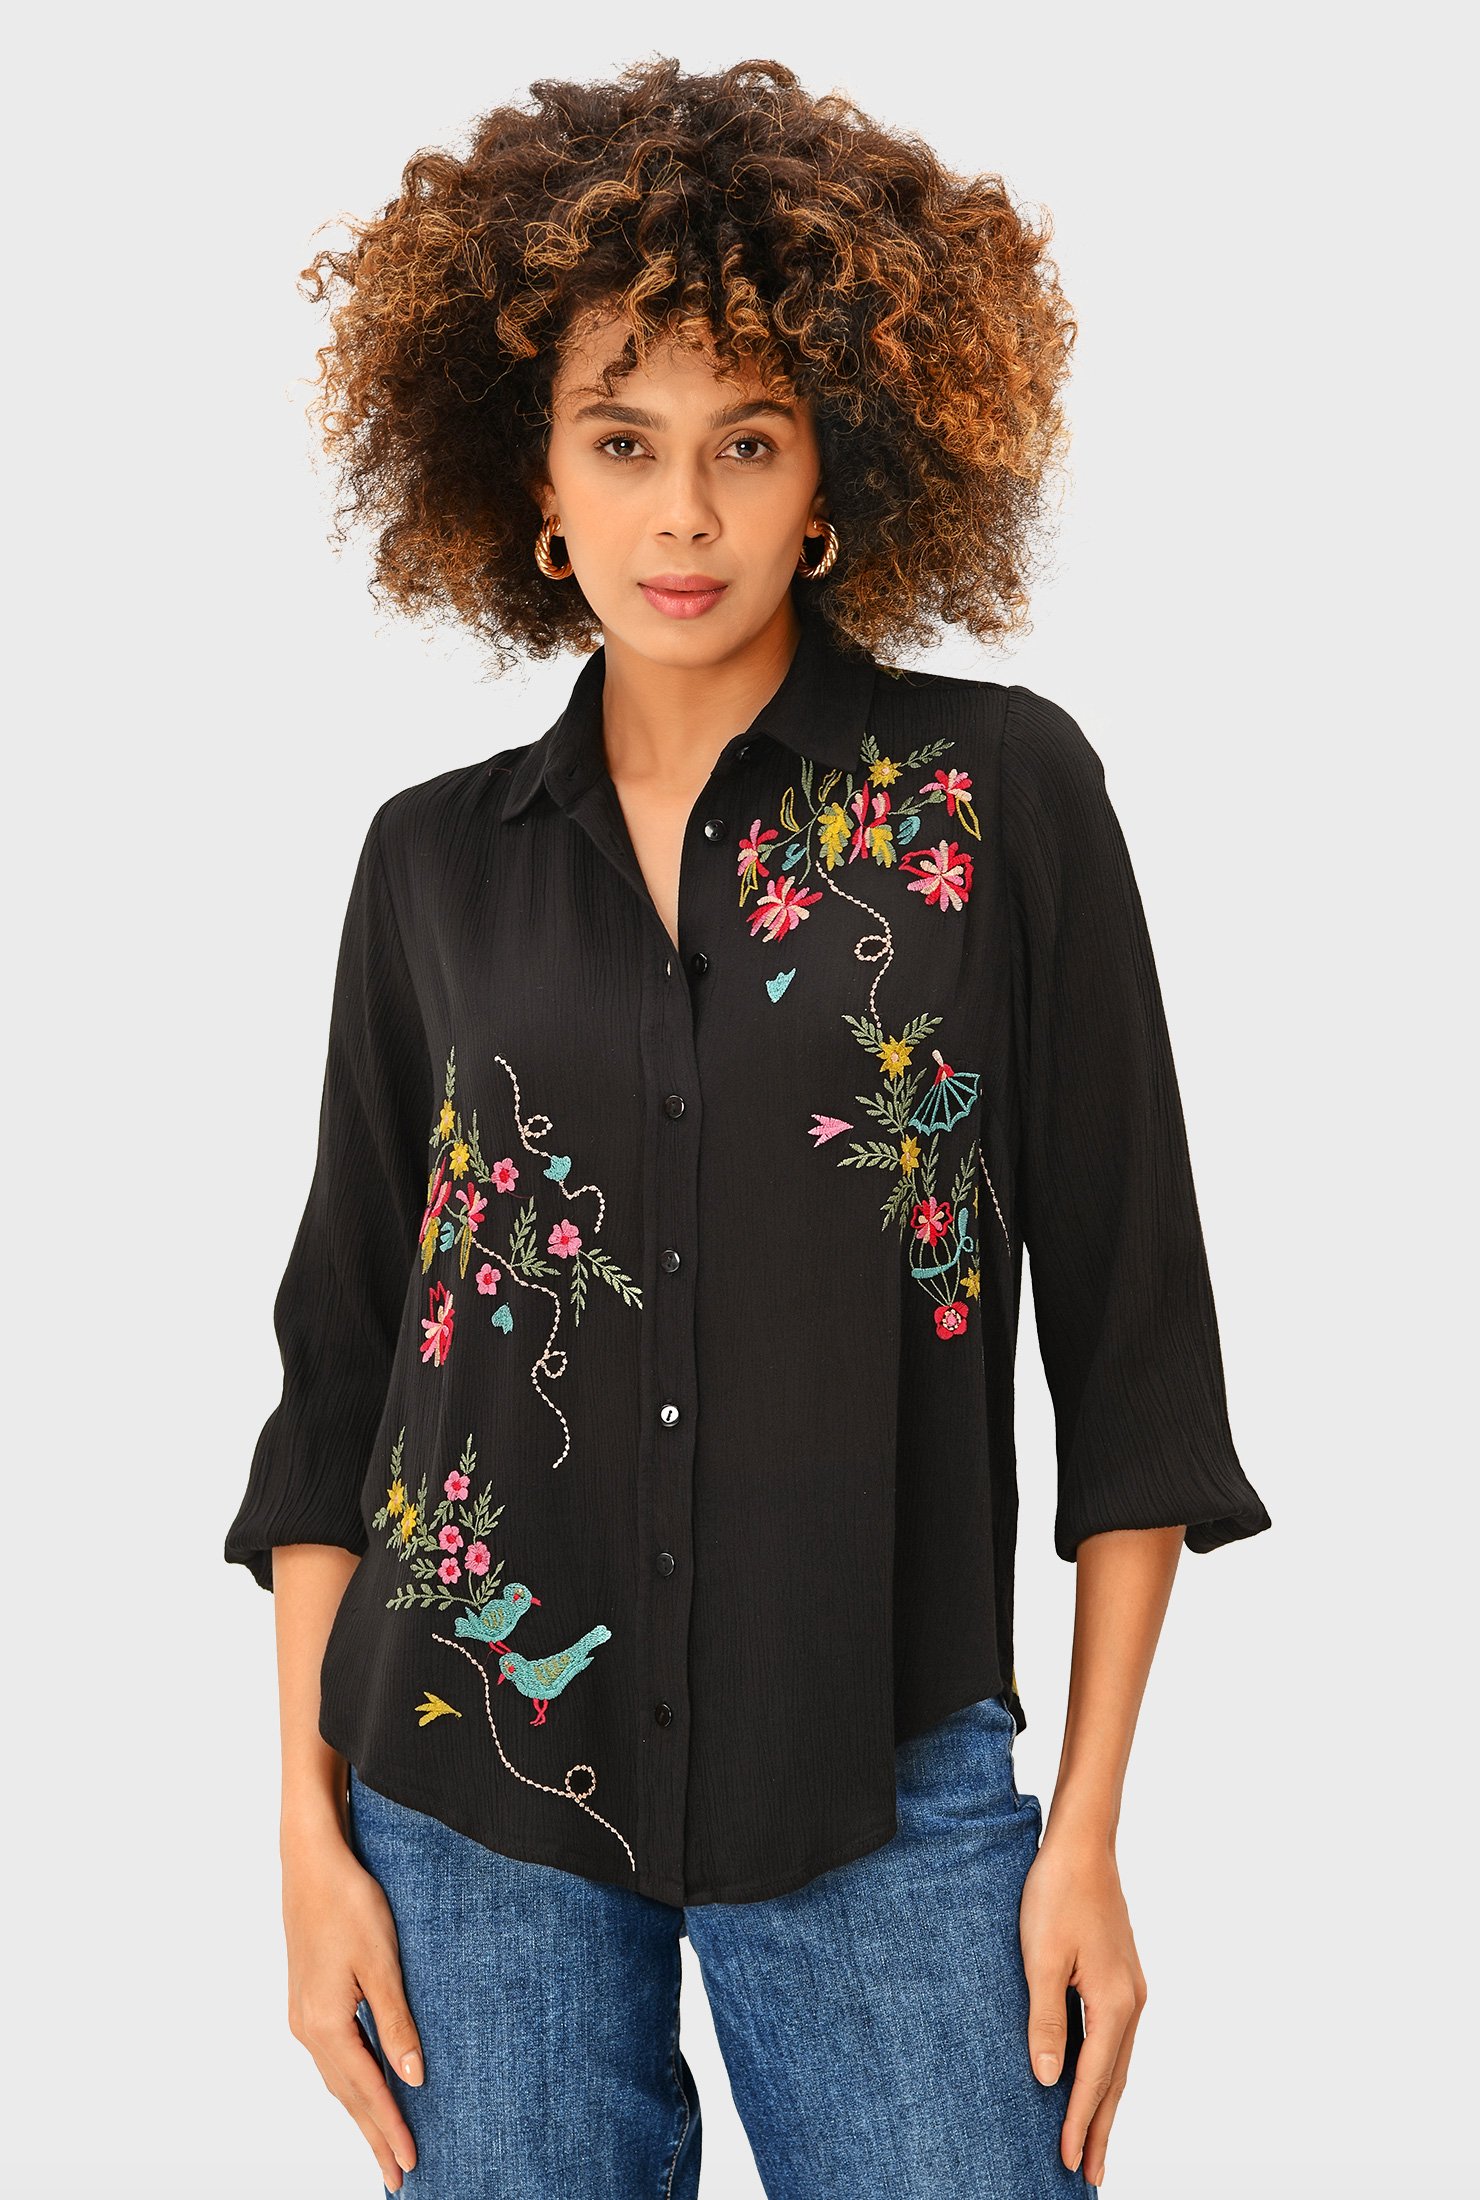 Shop Floral embroidery Rayon Crinkle shirt | eShakti